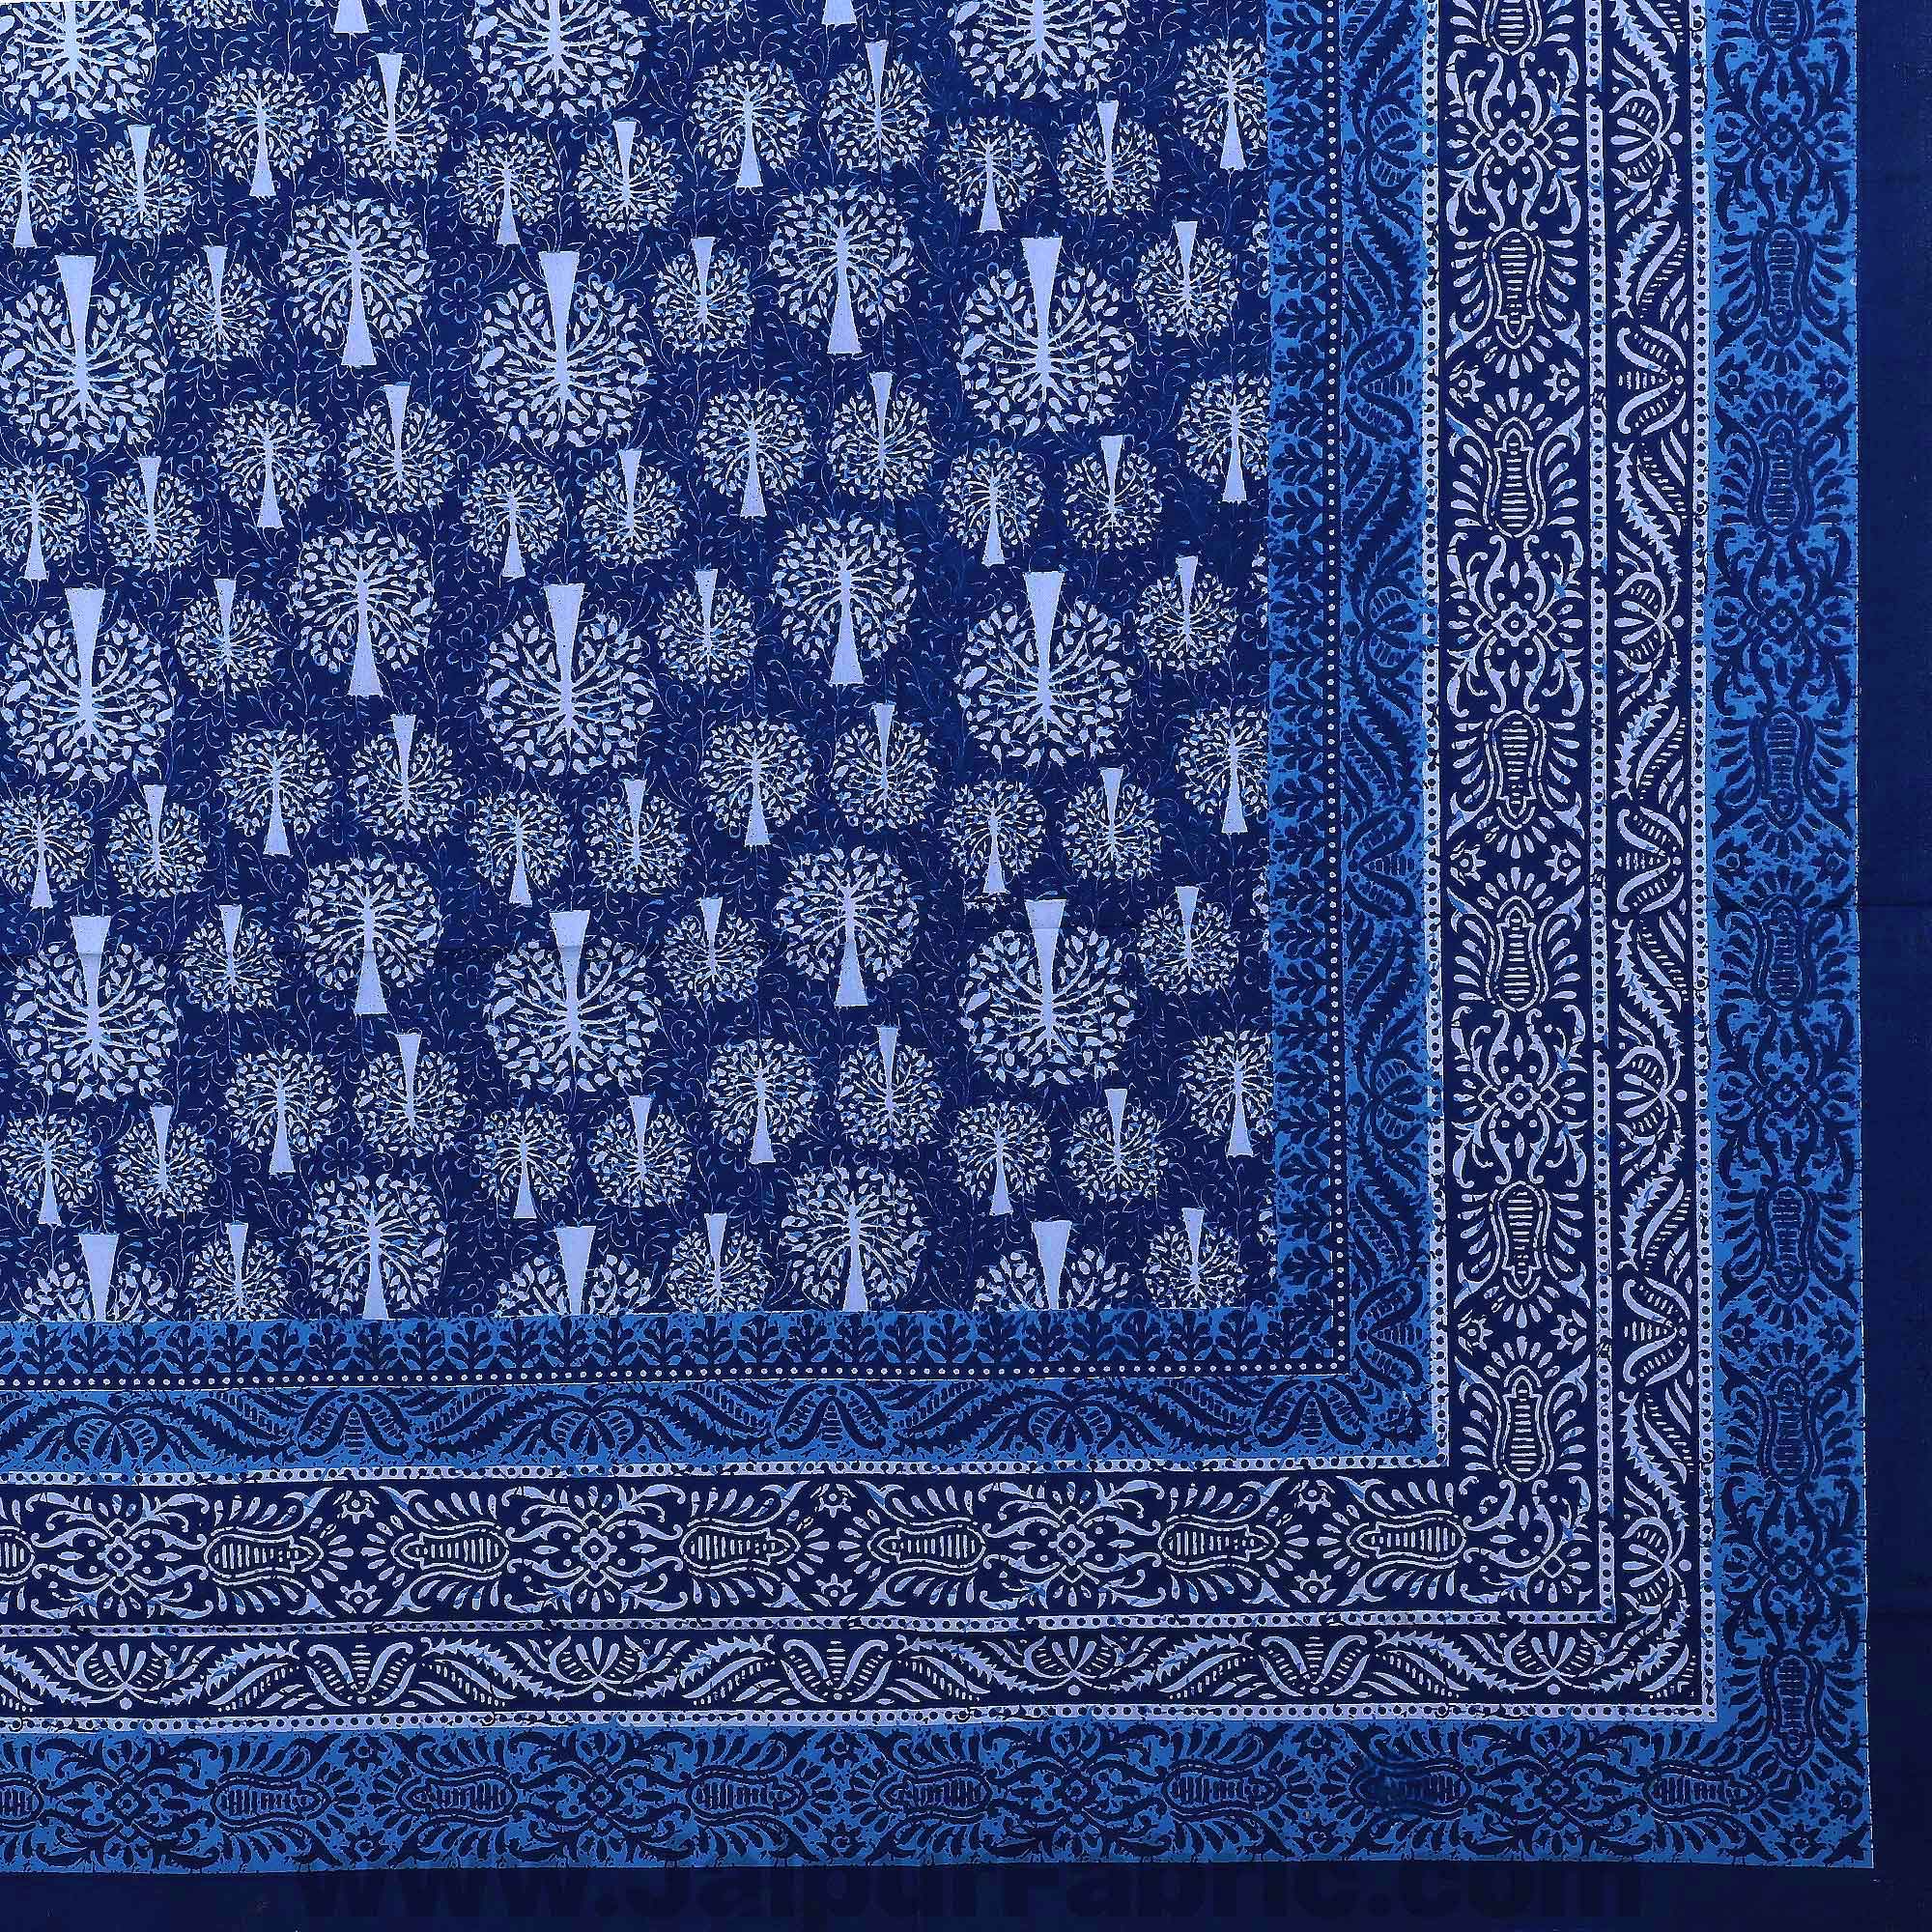 Royal Blue Palm Tree Pure Cotton Jaipuri Dabu Print Bedsheet